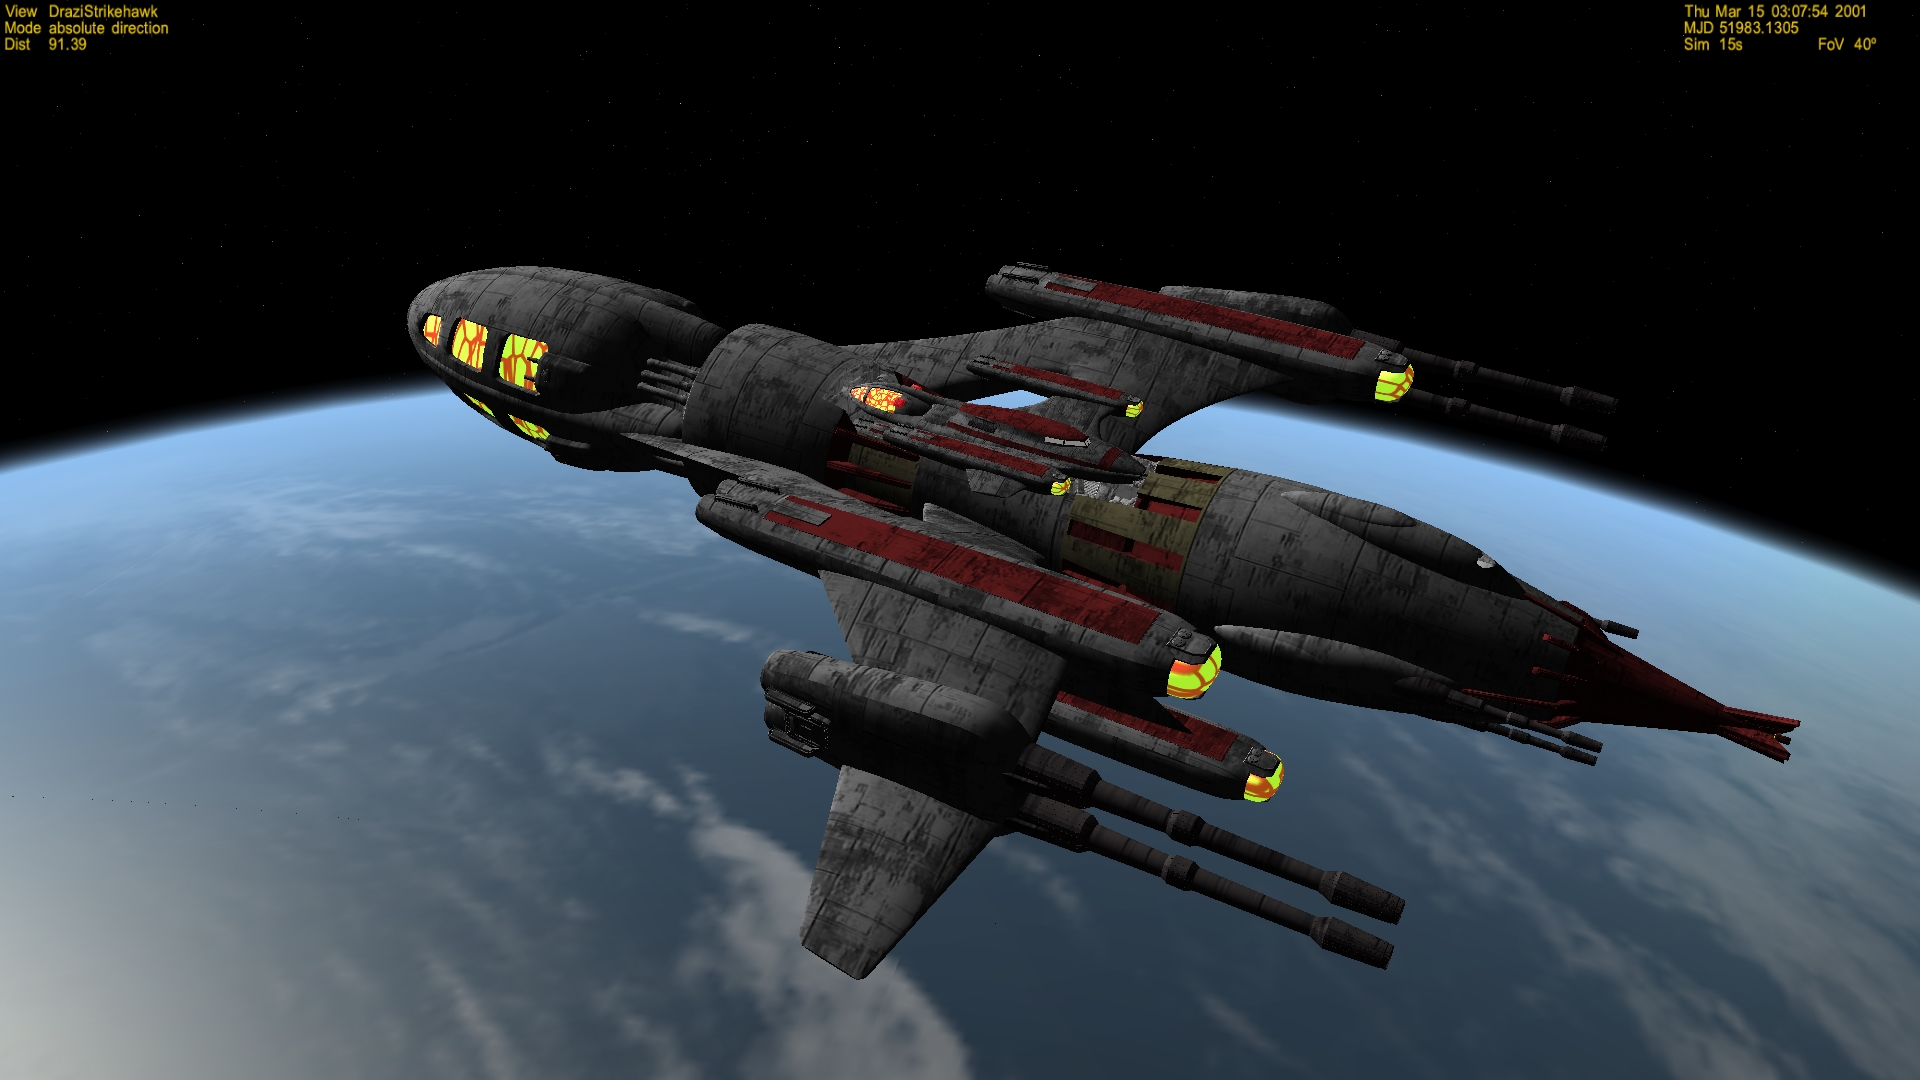 Drazi Strikehawk with docked Skyserpent.jpg